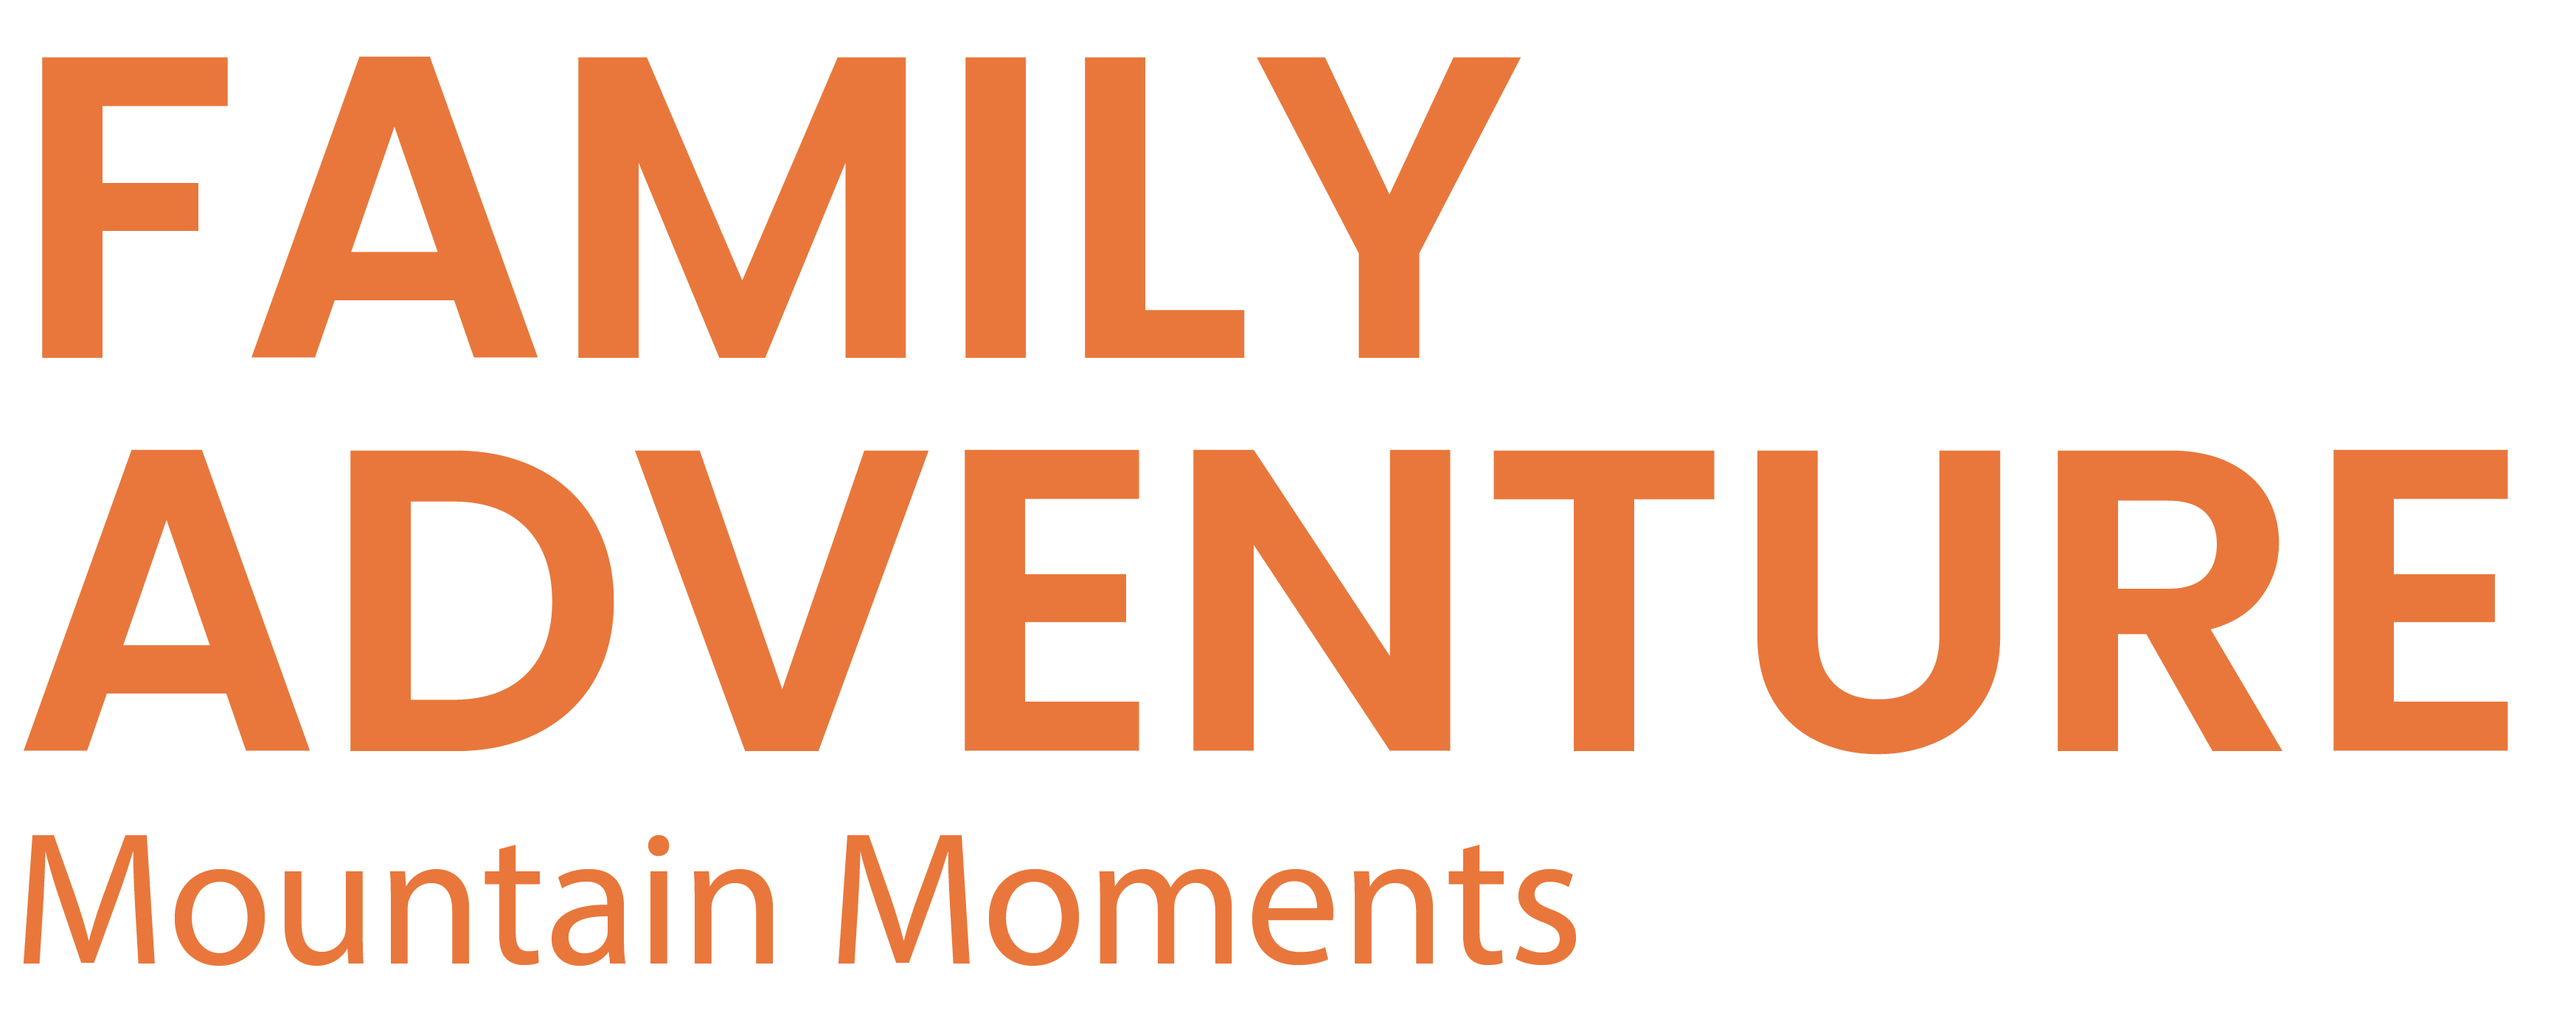 Family adventure logo